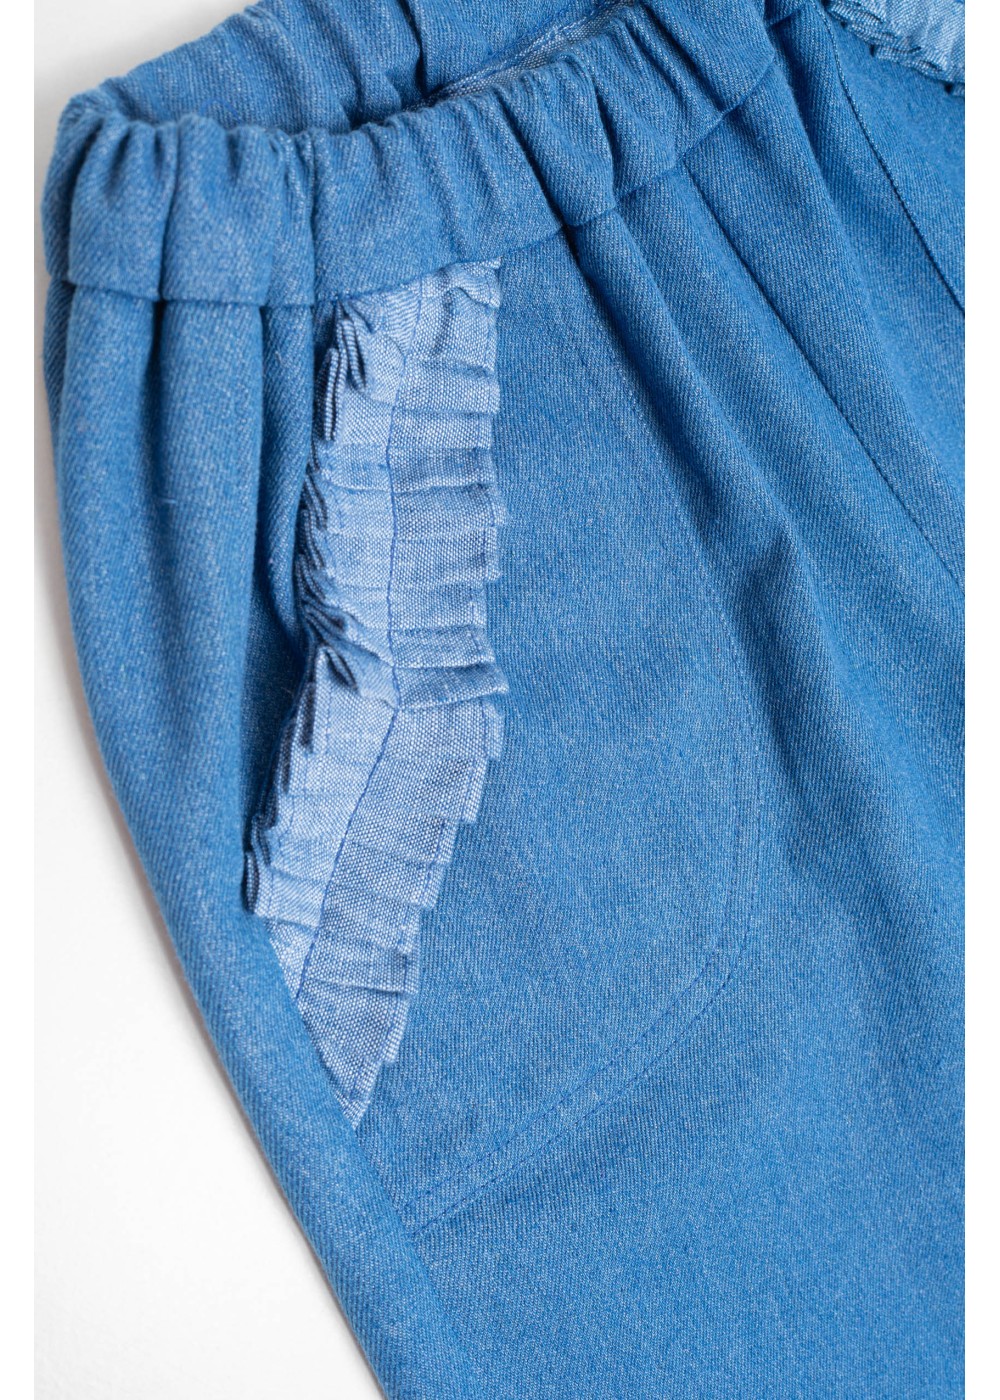 Short jeans Lara, denim short, blue, ruffled details